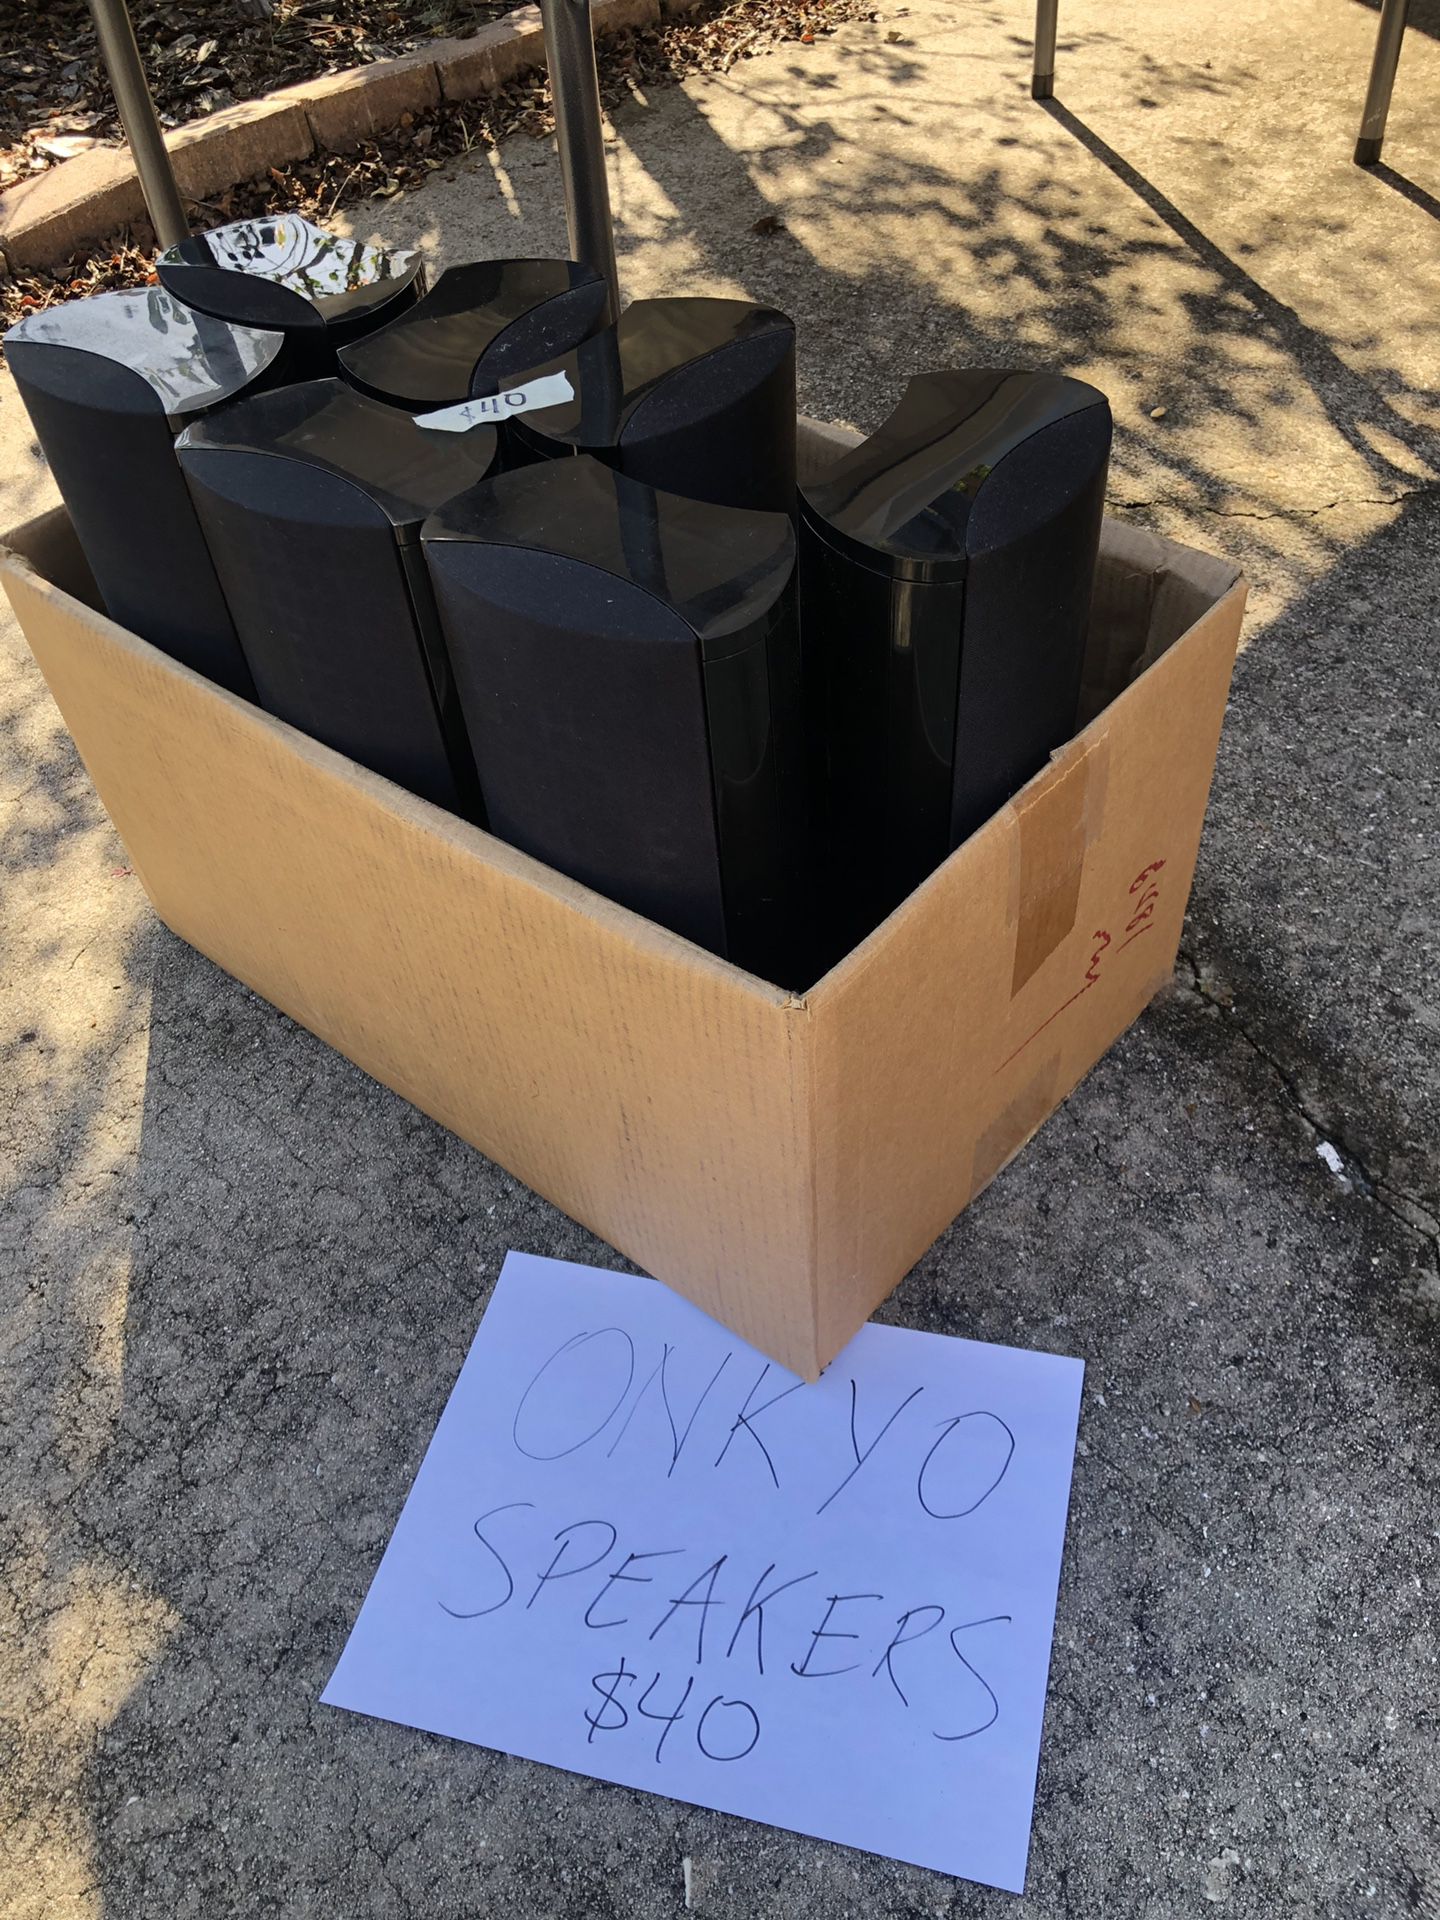 Onkyo 7.0 speakers set